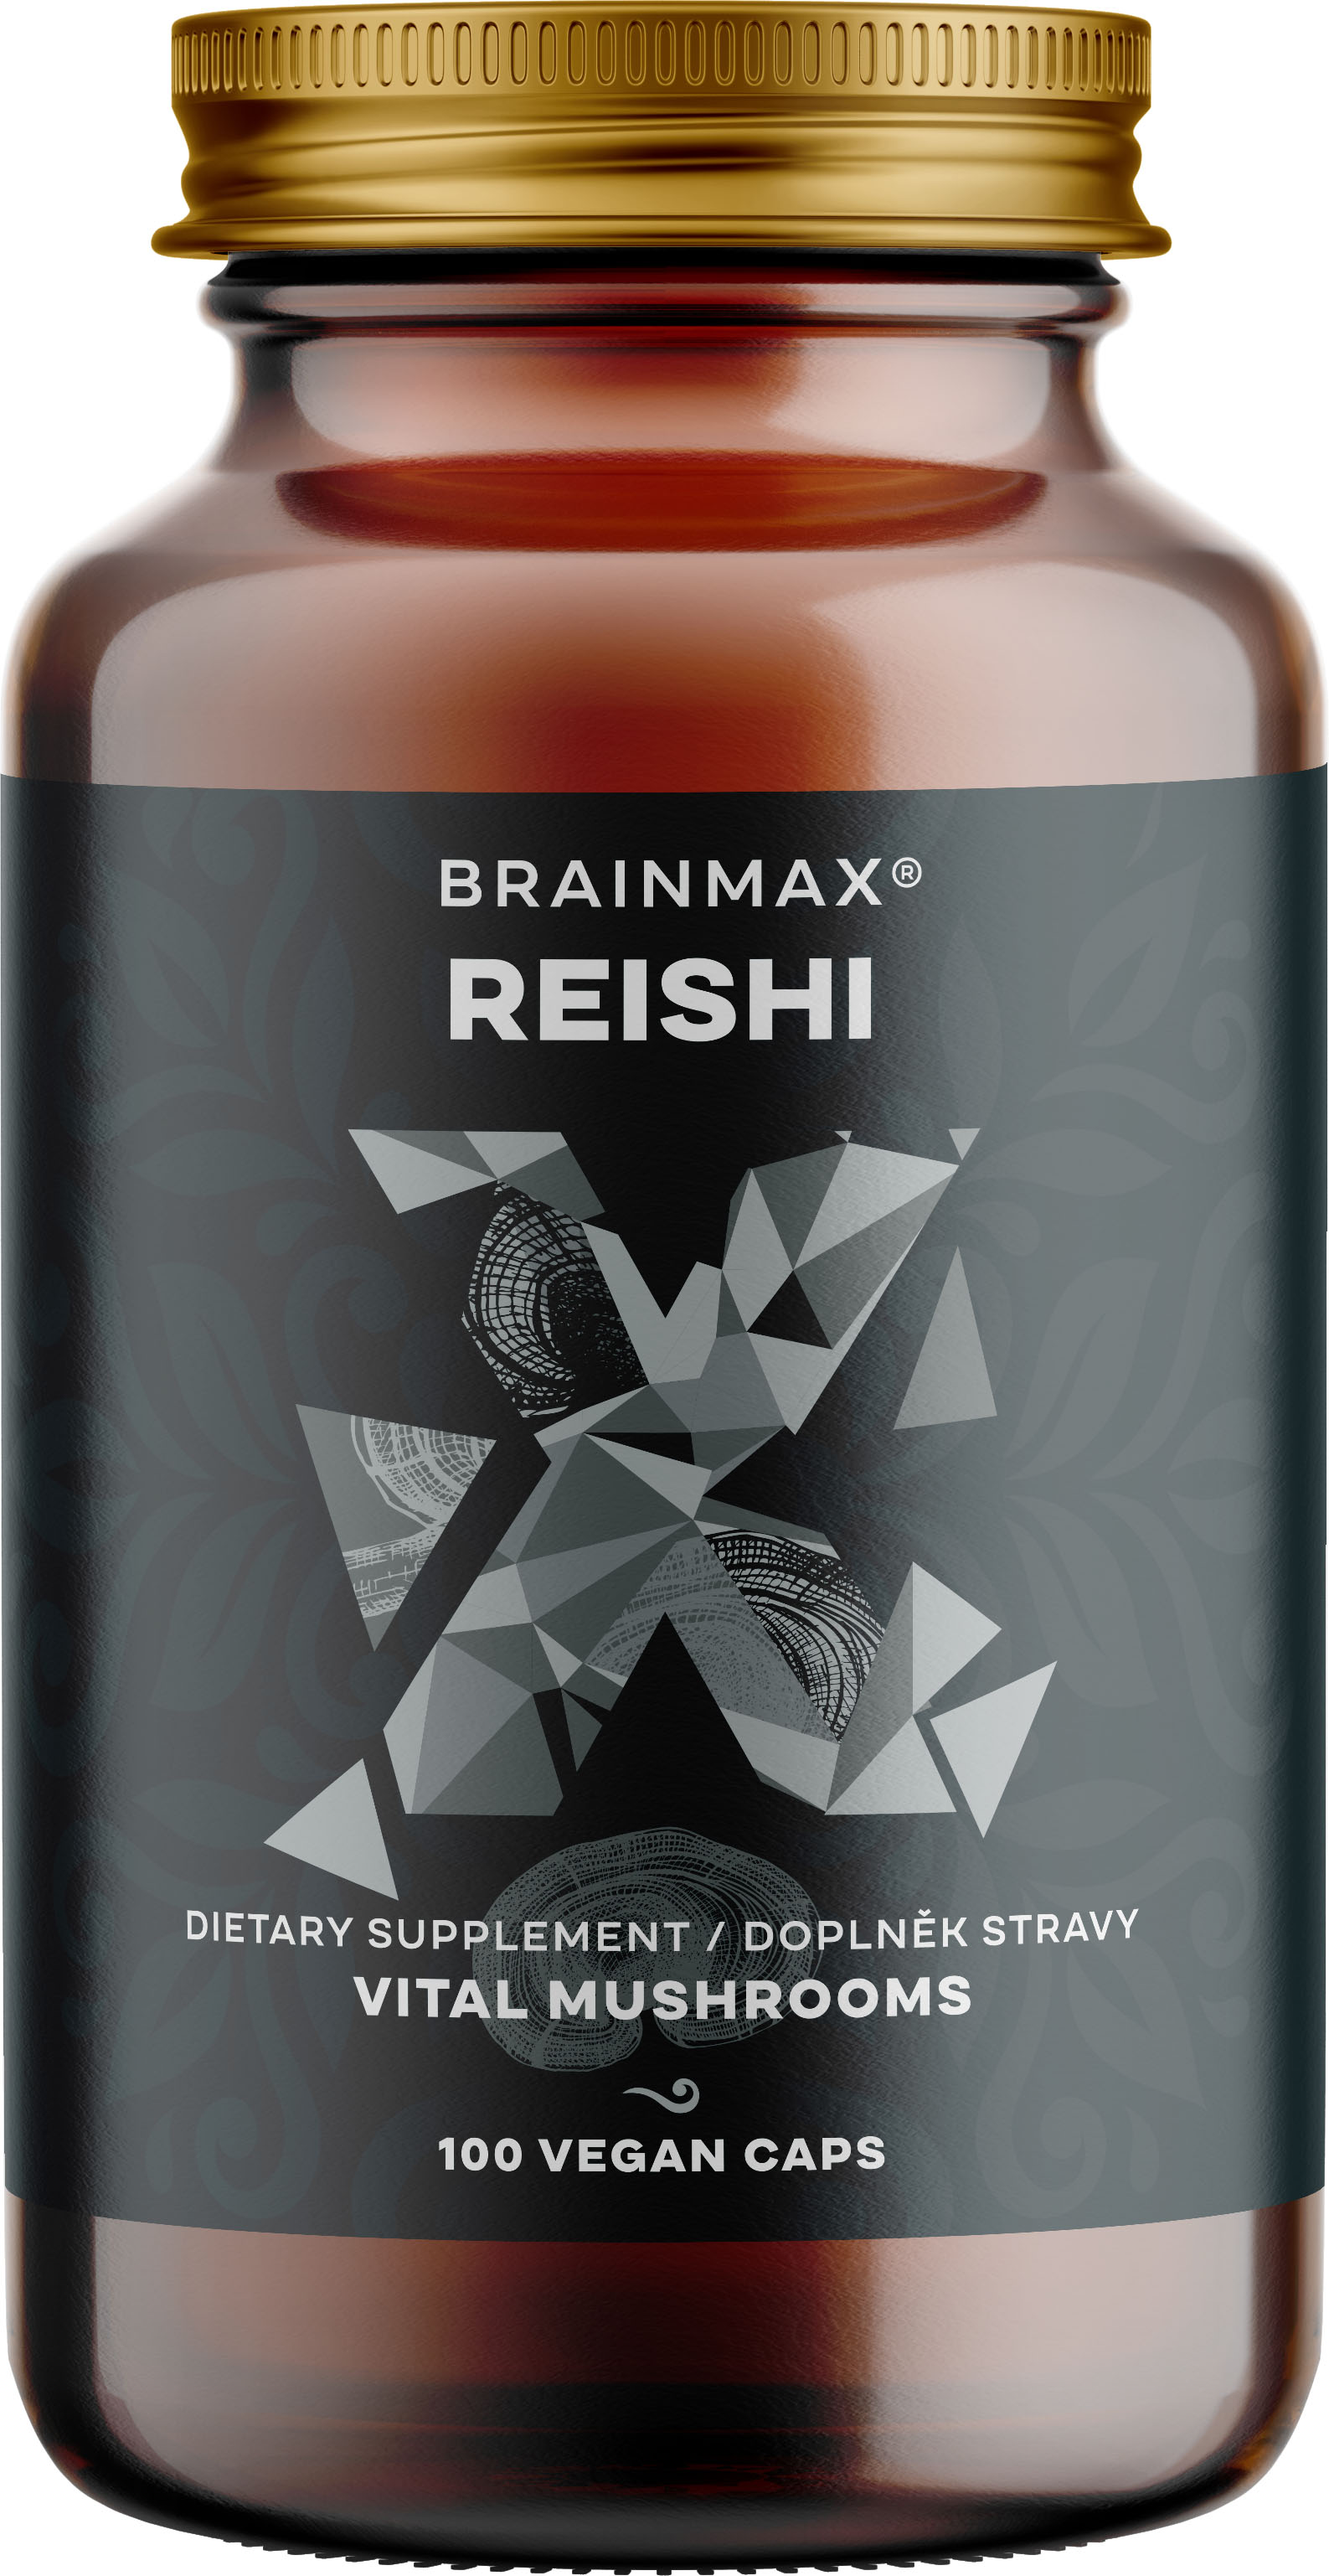 Levně BrainMax Reishi extrakt, 50 % polysacharidů a 20 % beta-1,3/1,6 D-glukanů, 500 mg, 100 rostlinných kapslí Extrakt z Genoderma lucidum s obsahem 50% polysacharidů a 20% beta-glukanů, doplněk stravy